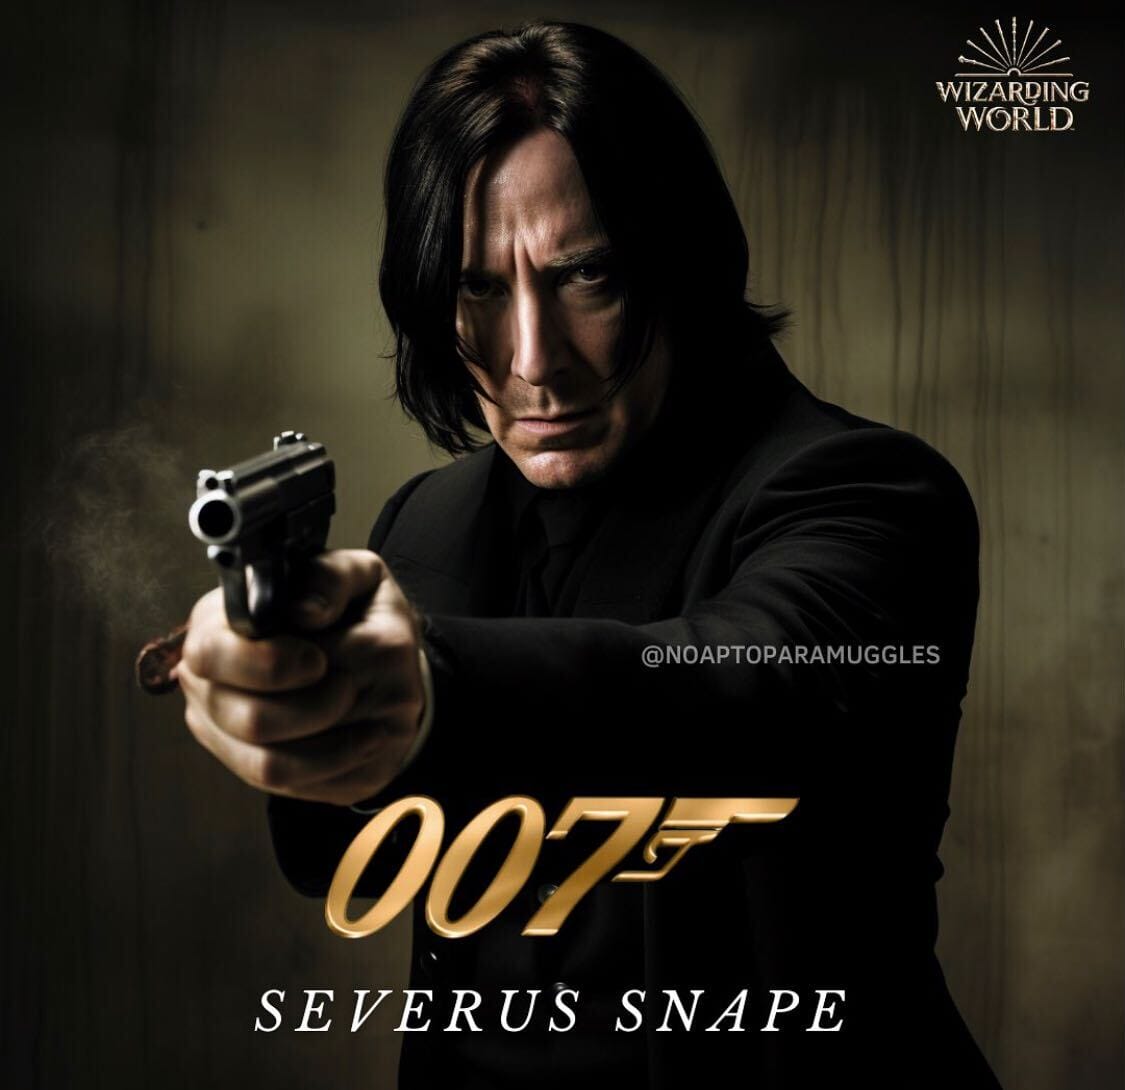 Severus Snape 007